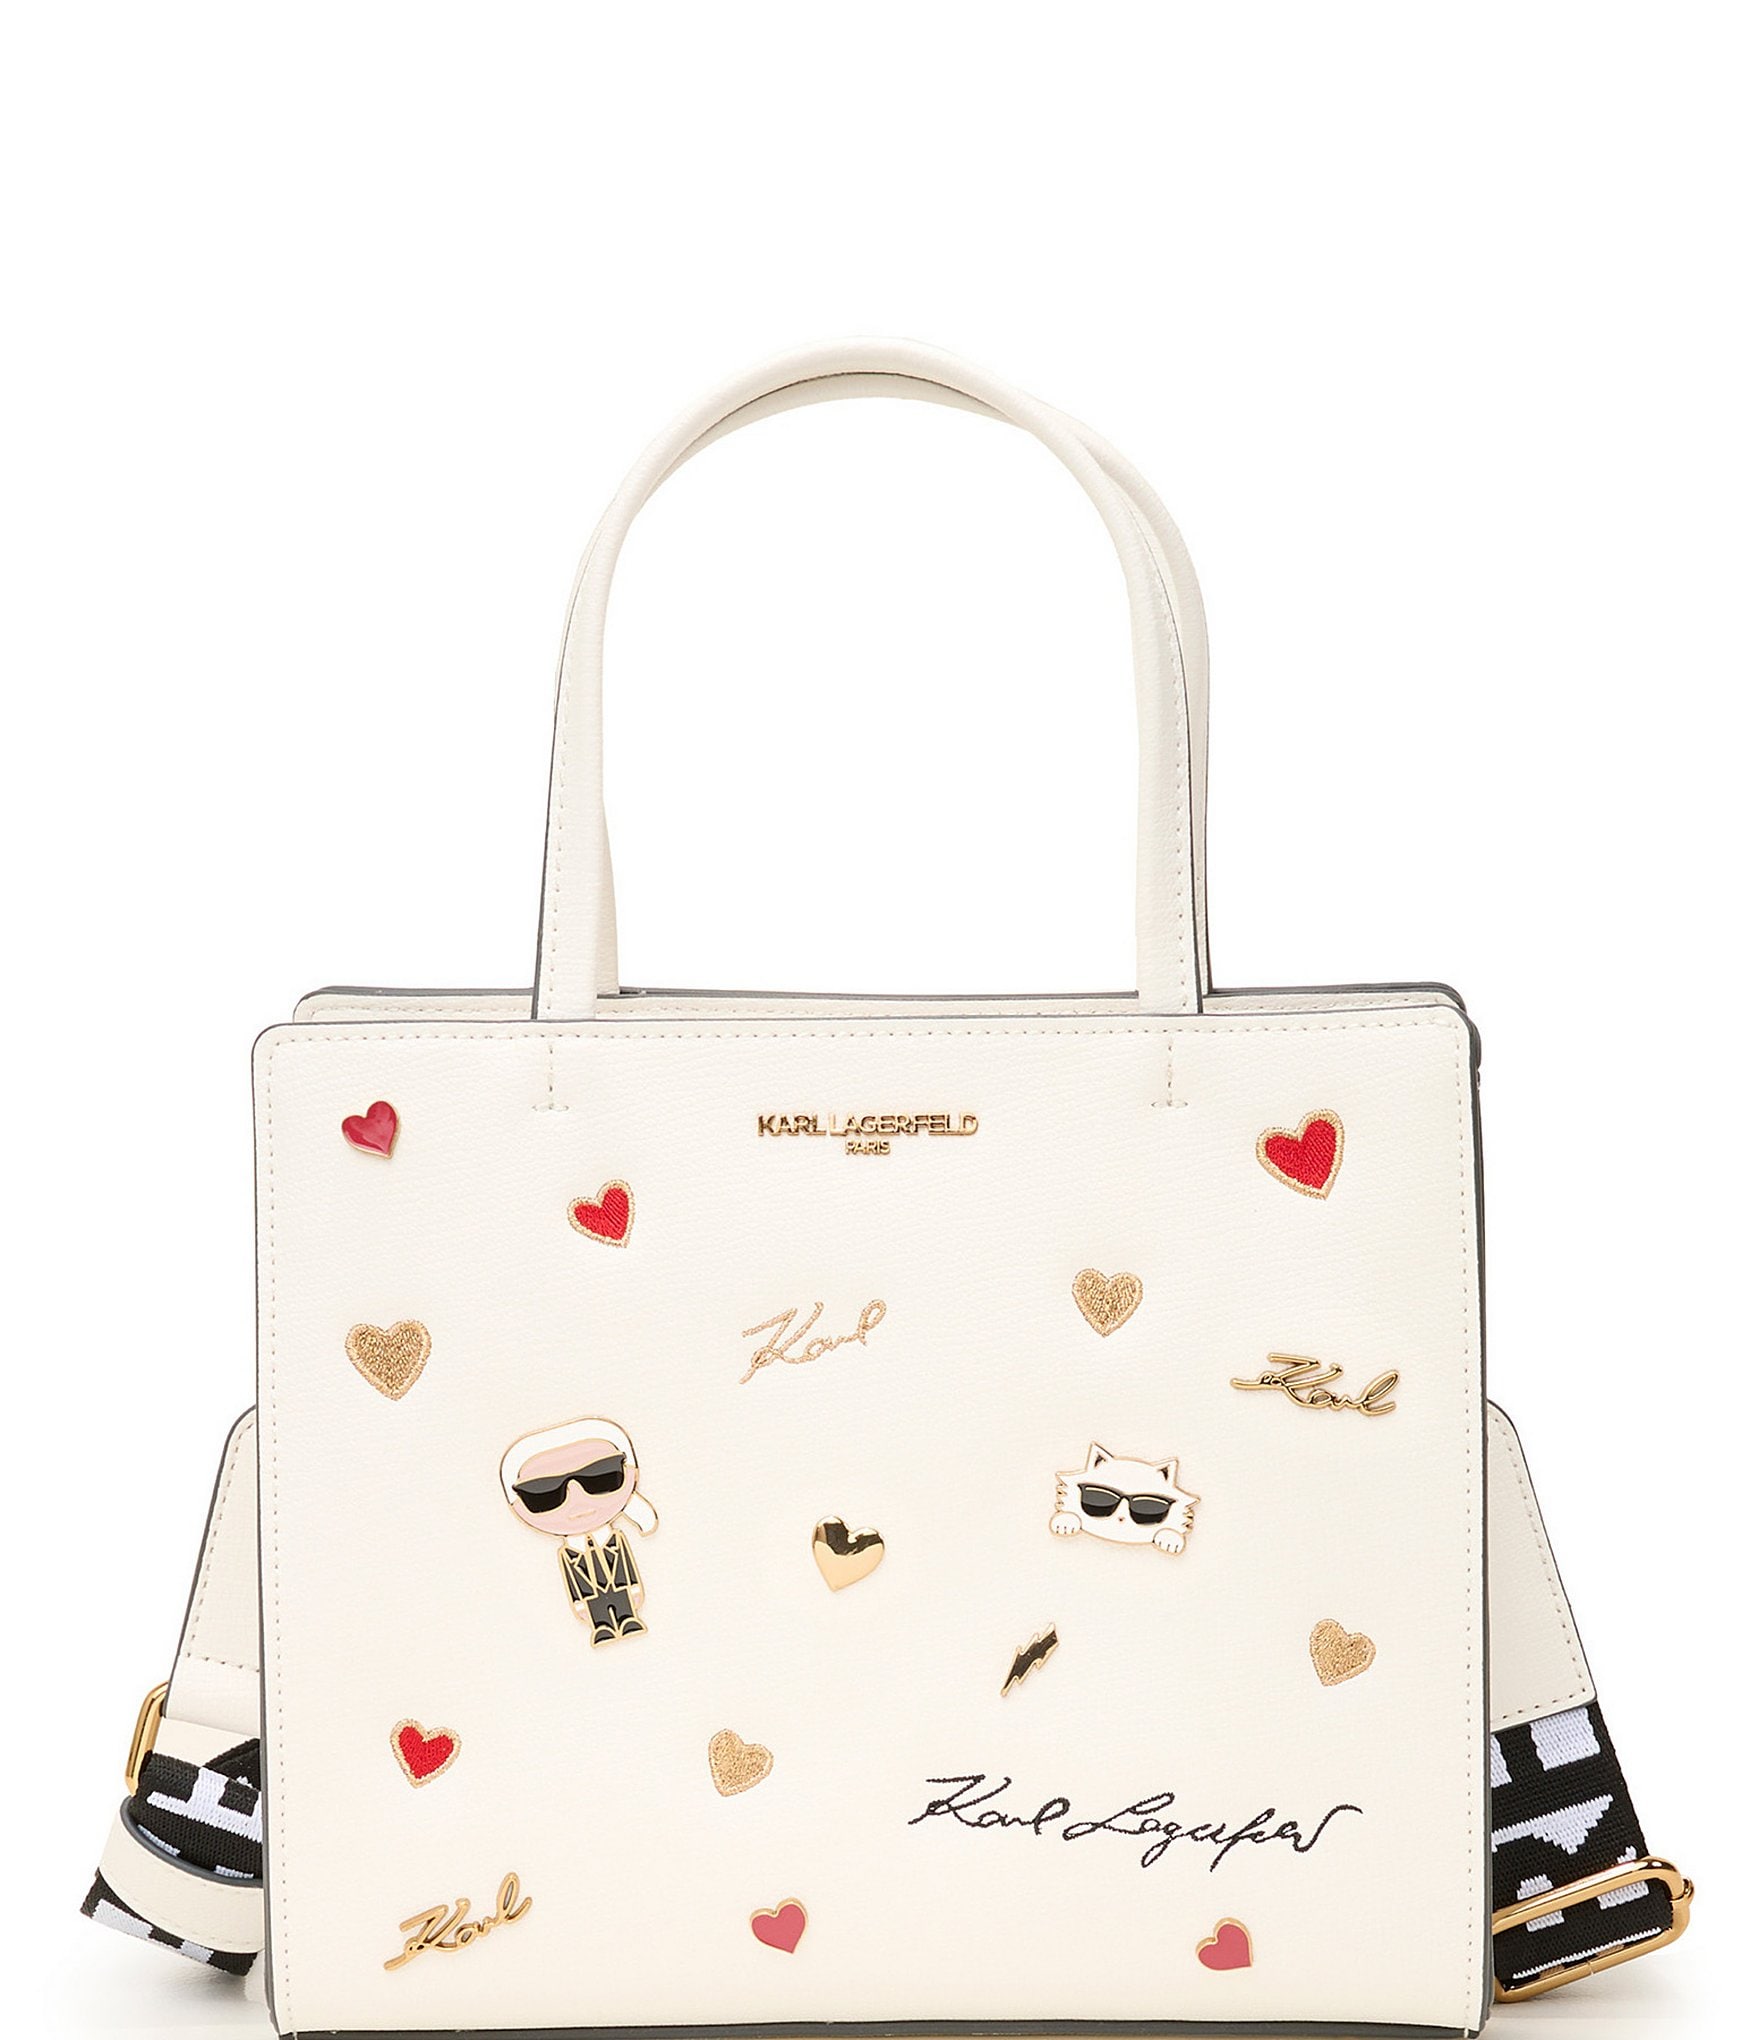 Parisian Handbag Designers You Need to Know - Paris Perfect